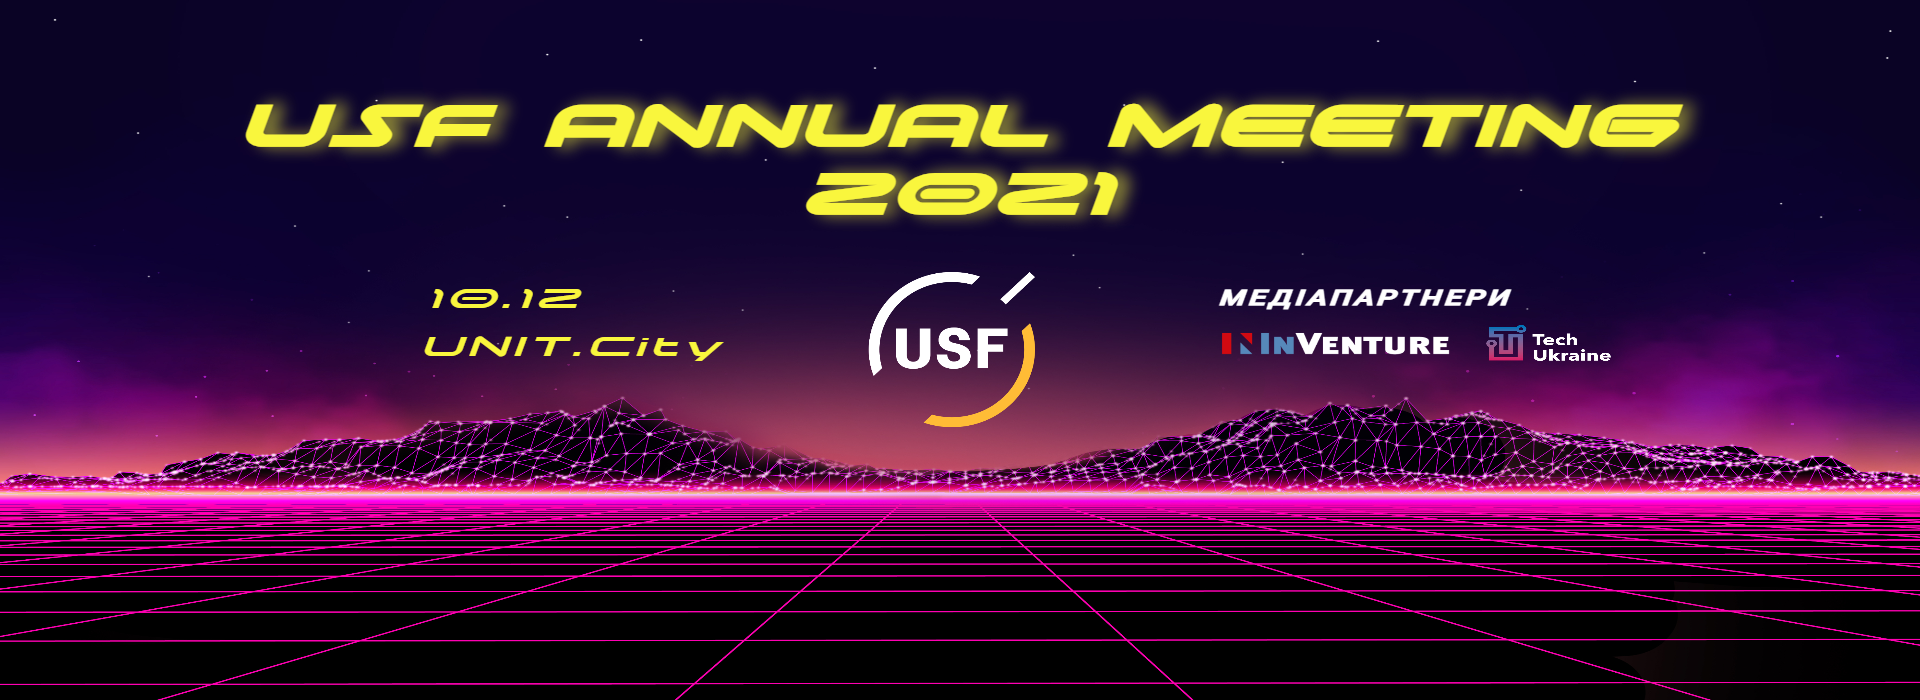 USF Annual Meeting 2021